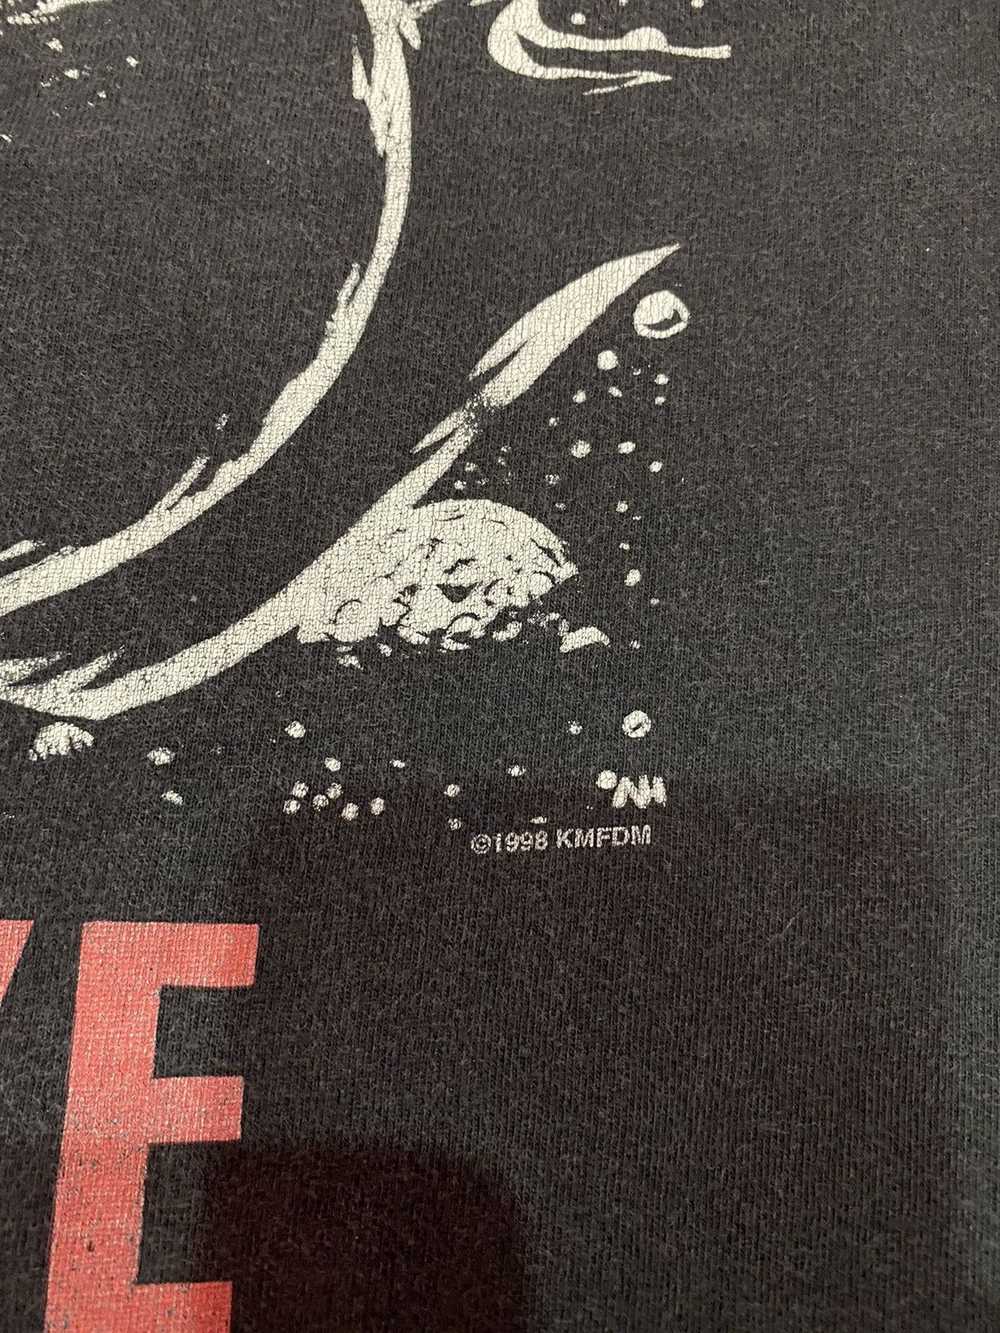 Band Tees × Rock T Shirt × Vintage vintage KMFDM … - image 4